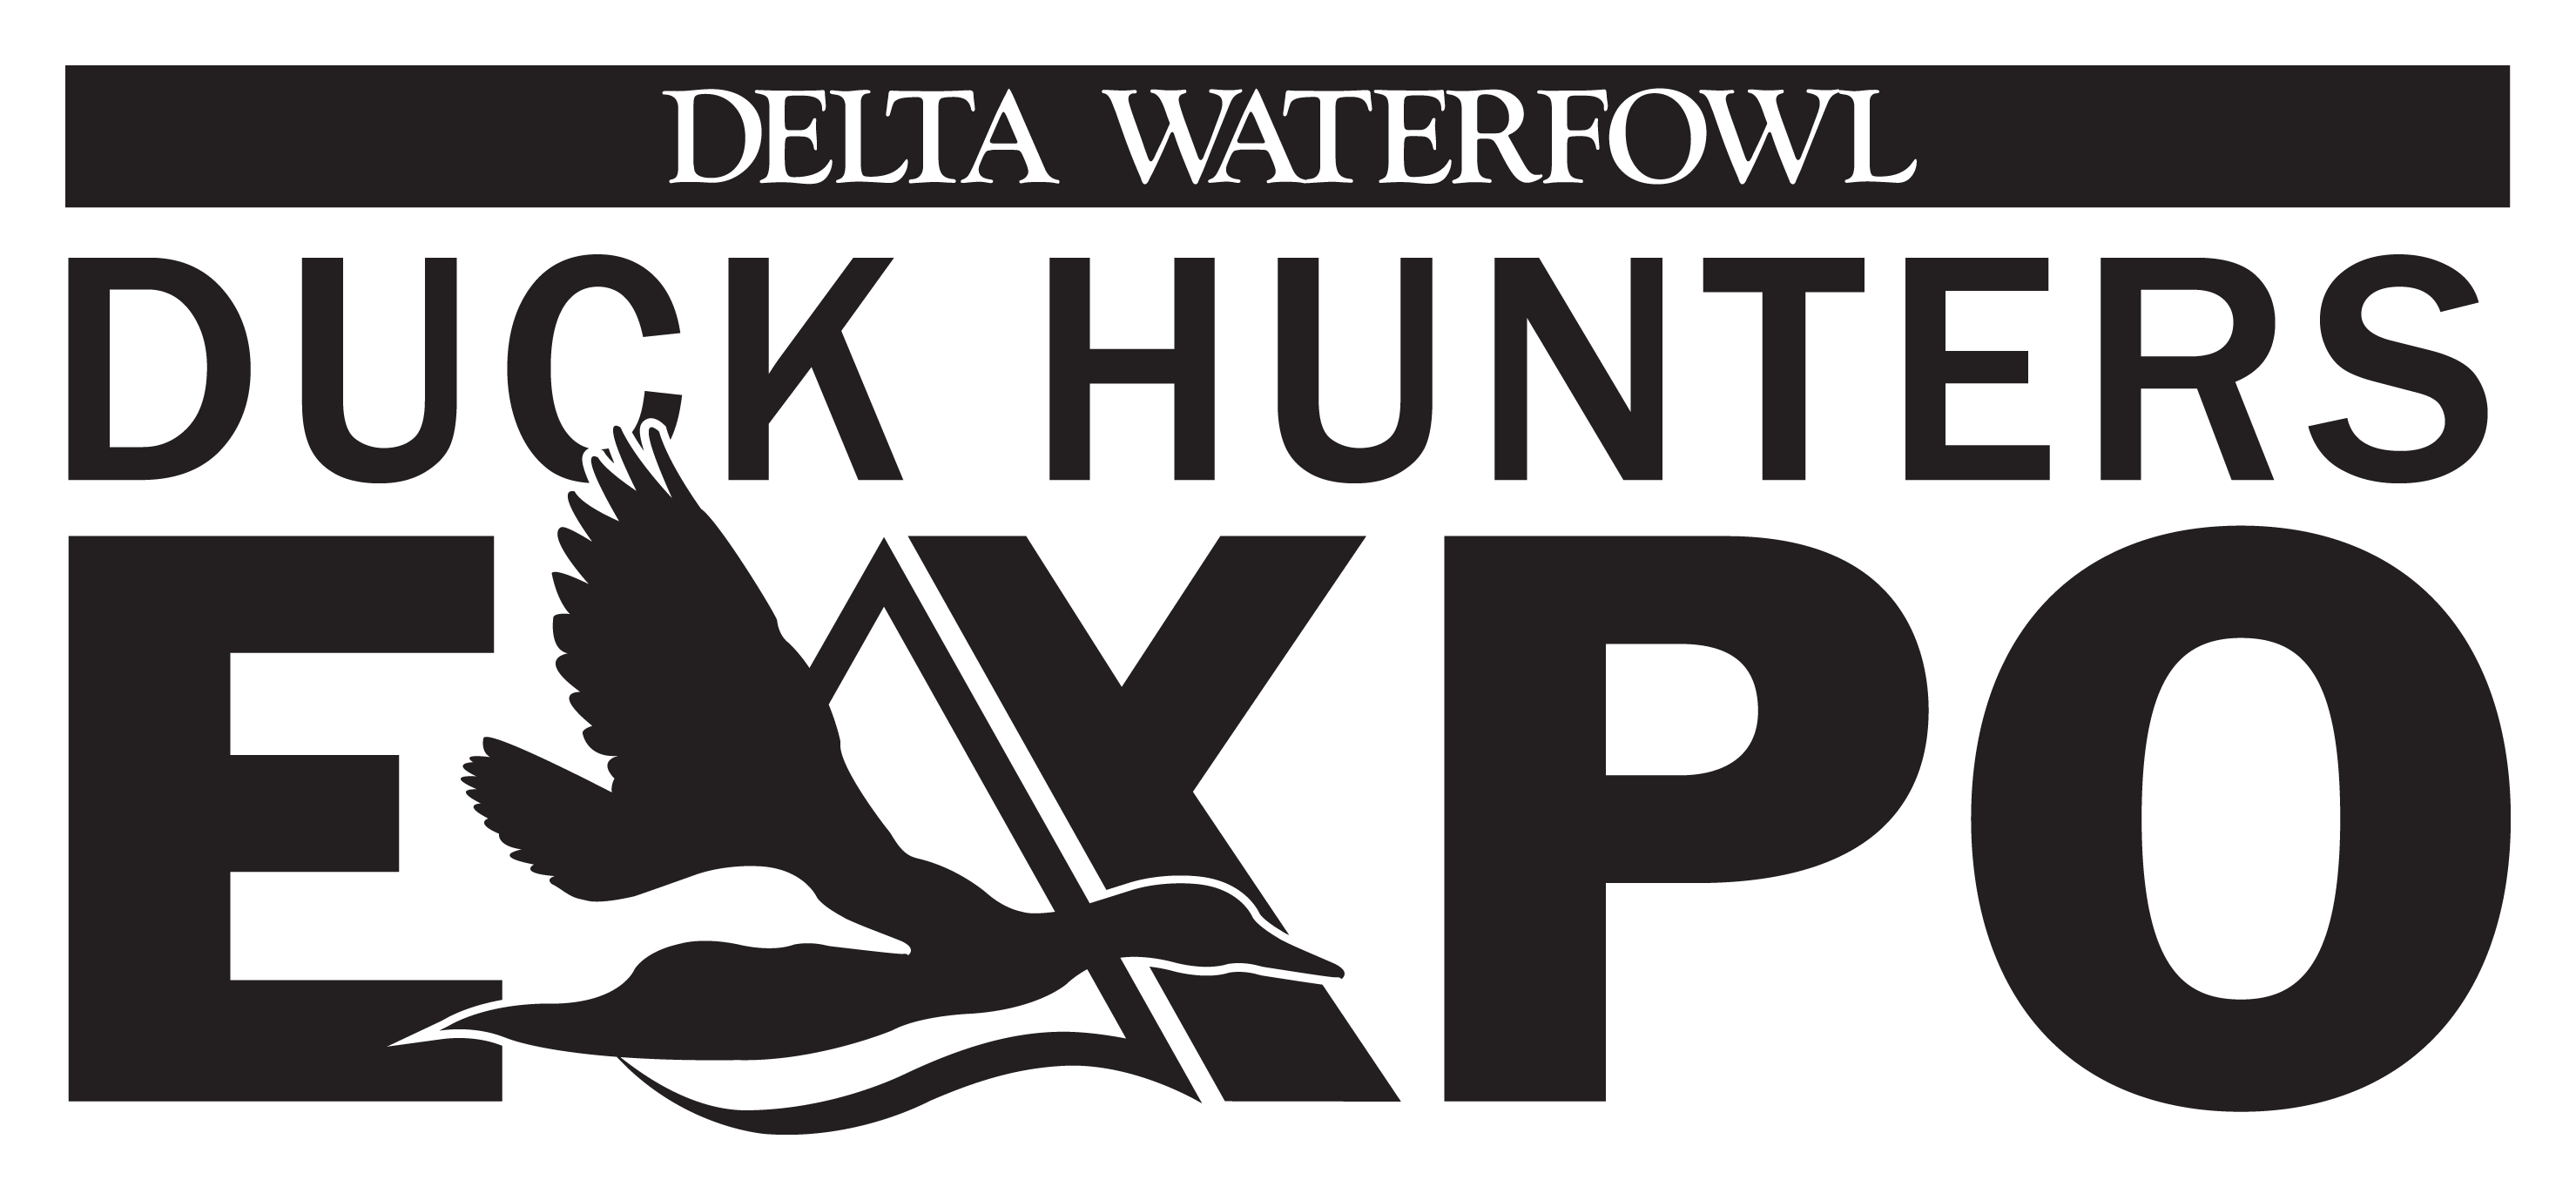 Kent Cartridge to exhibit at Delta Waterfowl Expo 